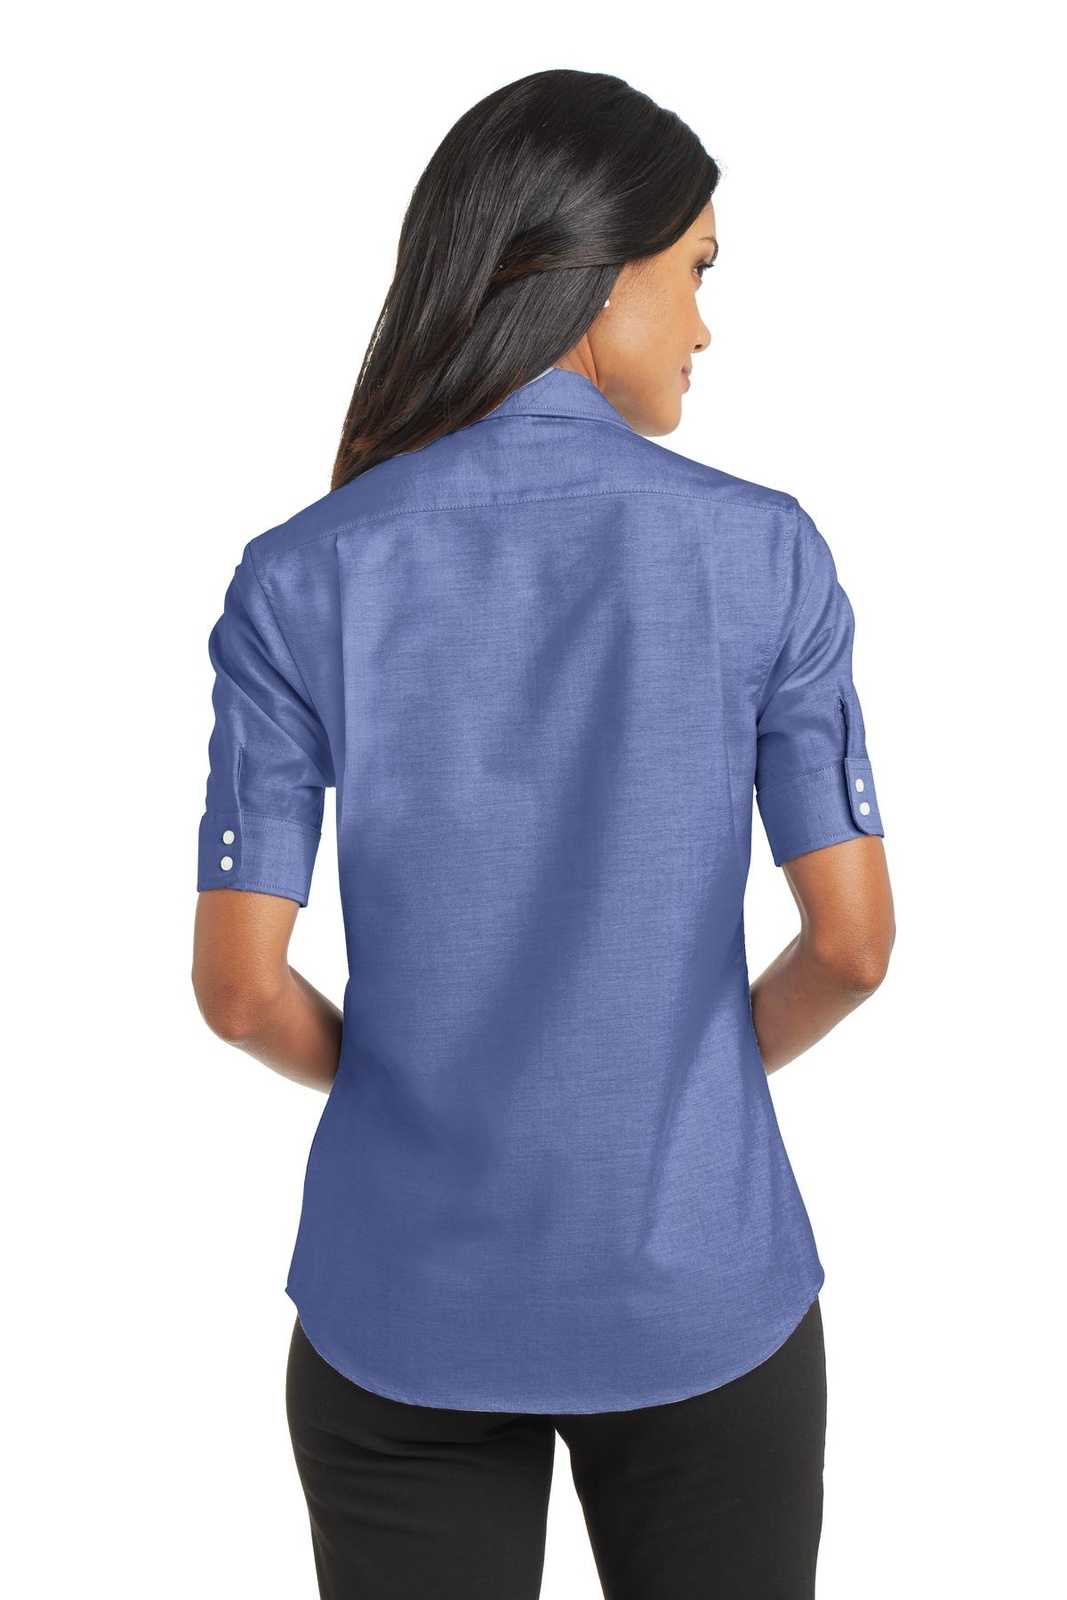 Port Authority L659 Ladies Short Sleeve Superpro Oxford Shirt - Navy - HIT a Double - 2